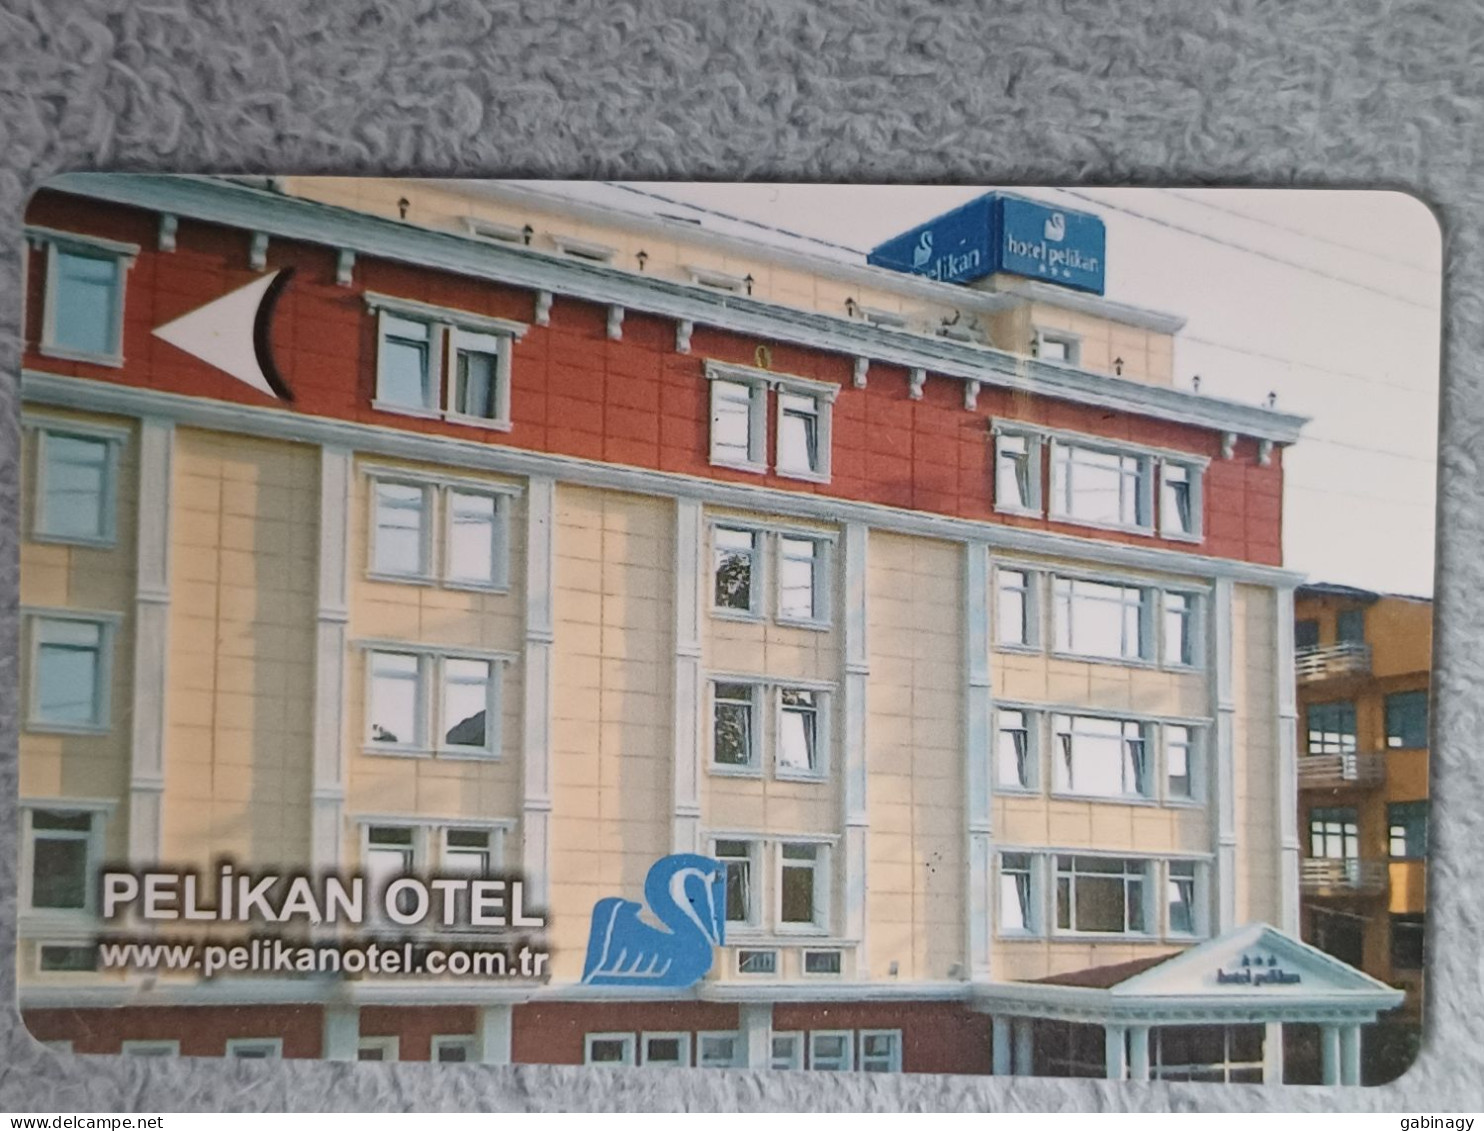 HOTEL KEYS - 2558 - TURKEY - PELIKAN HOTEL - Hotel Keycards